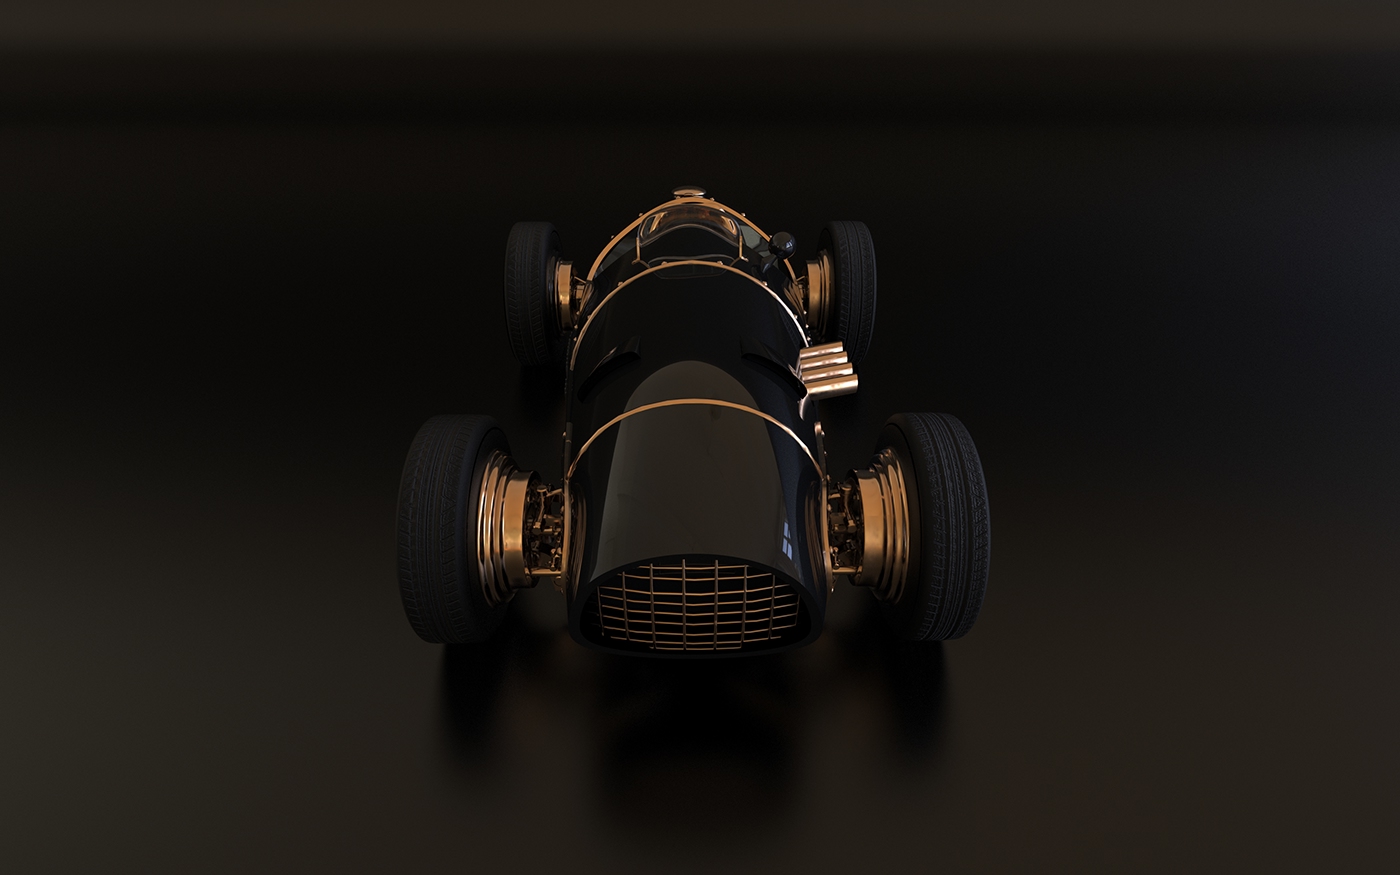 design 3D CG automotive   FERRARI car turntable modeling rendering art direction 